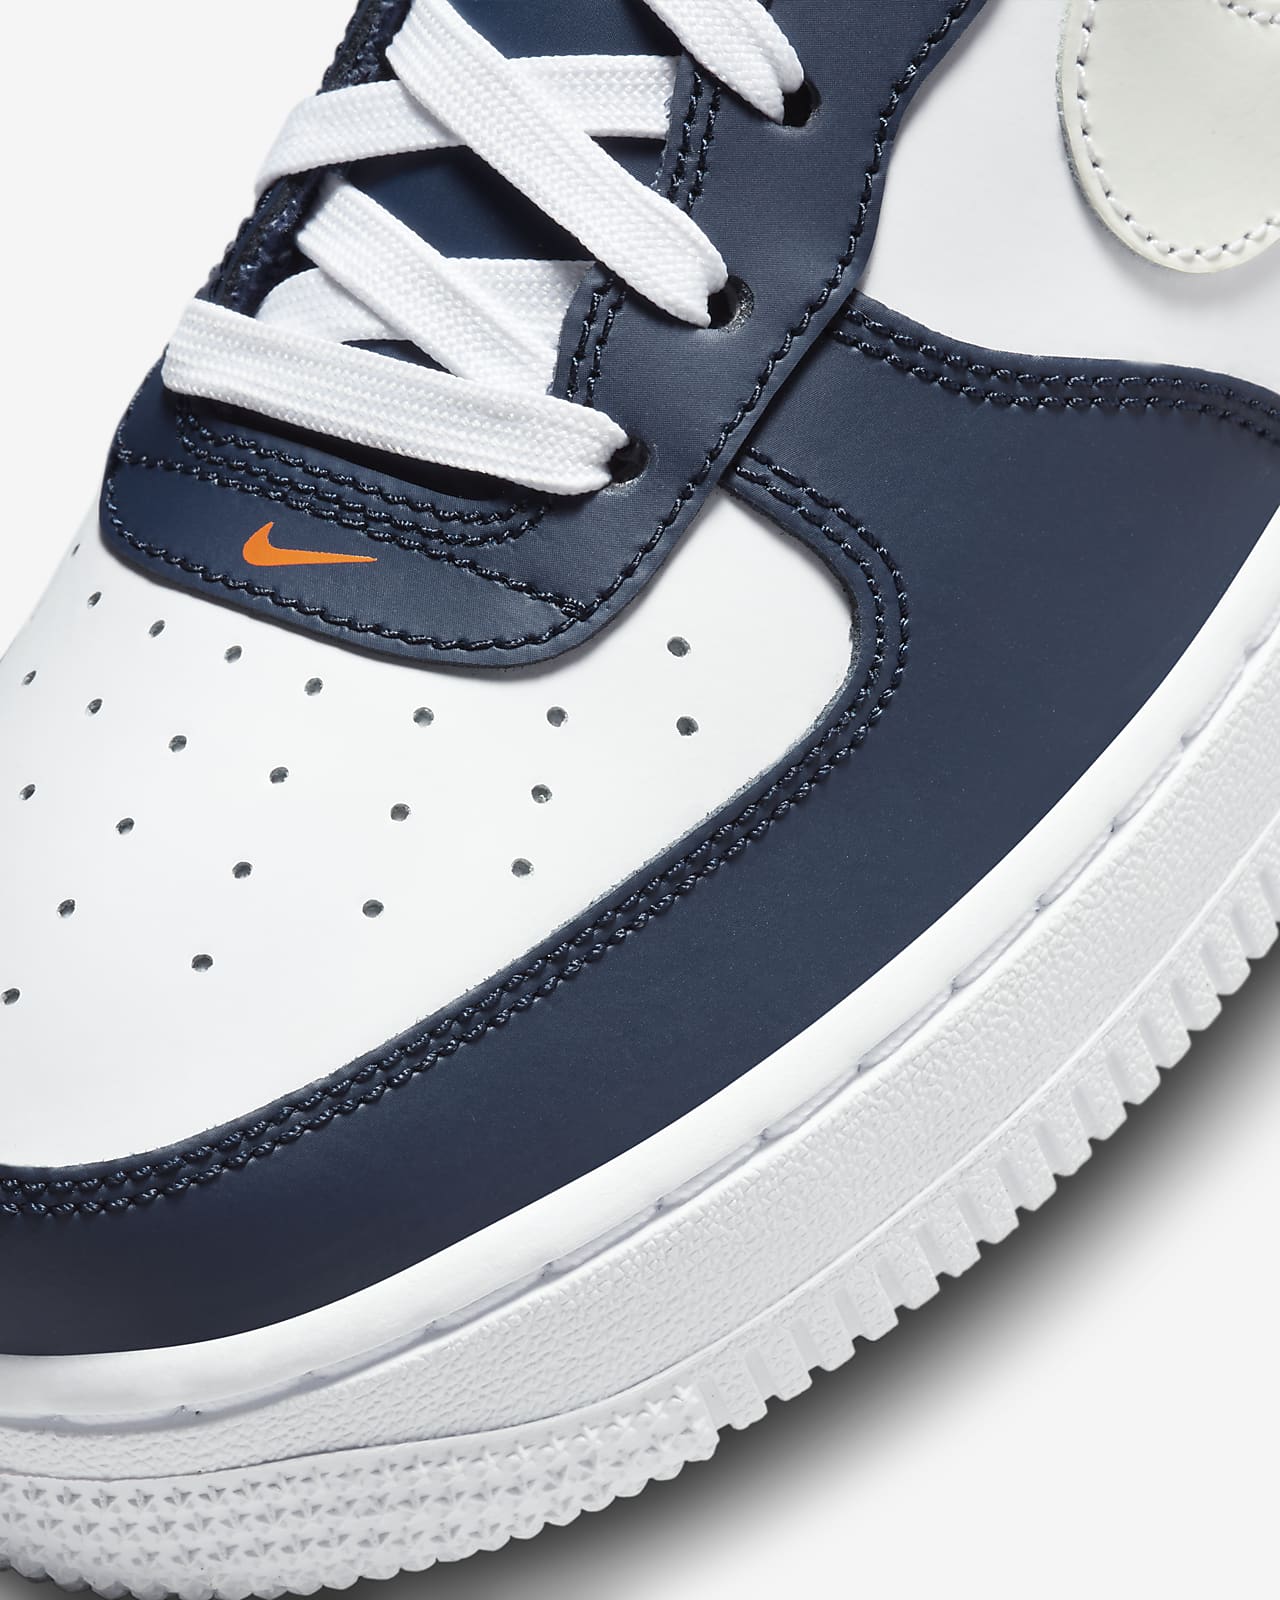 Nike Air Force 1 LV8 Older Kids' Shoes